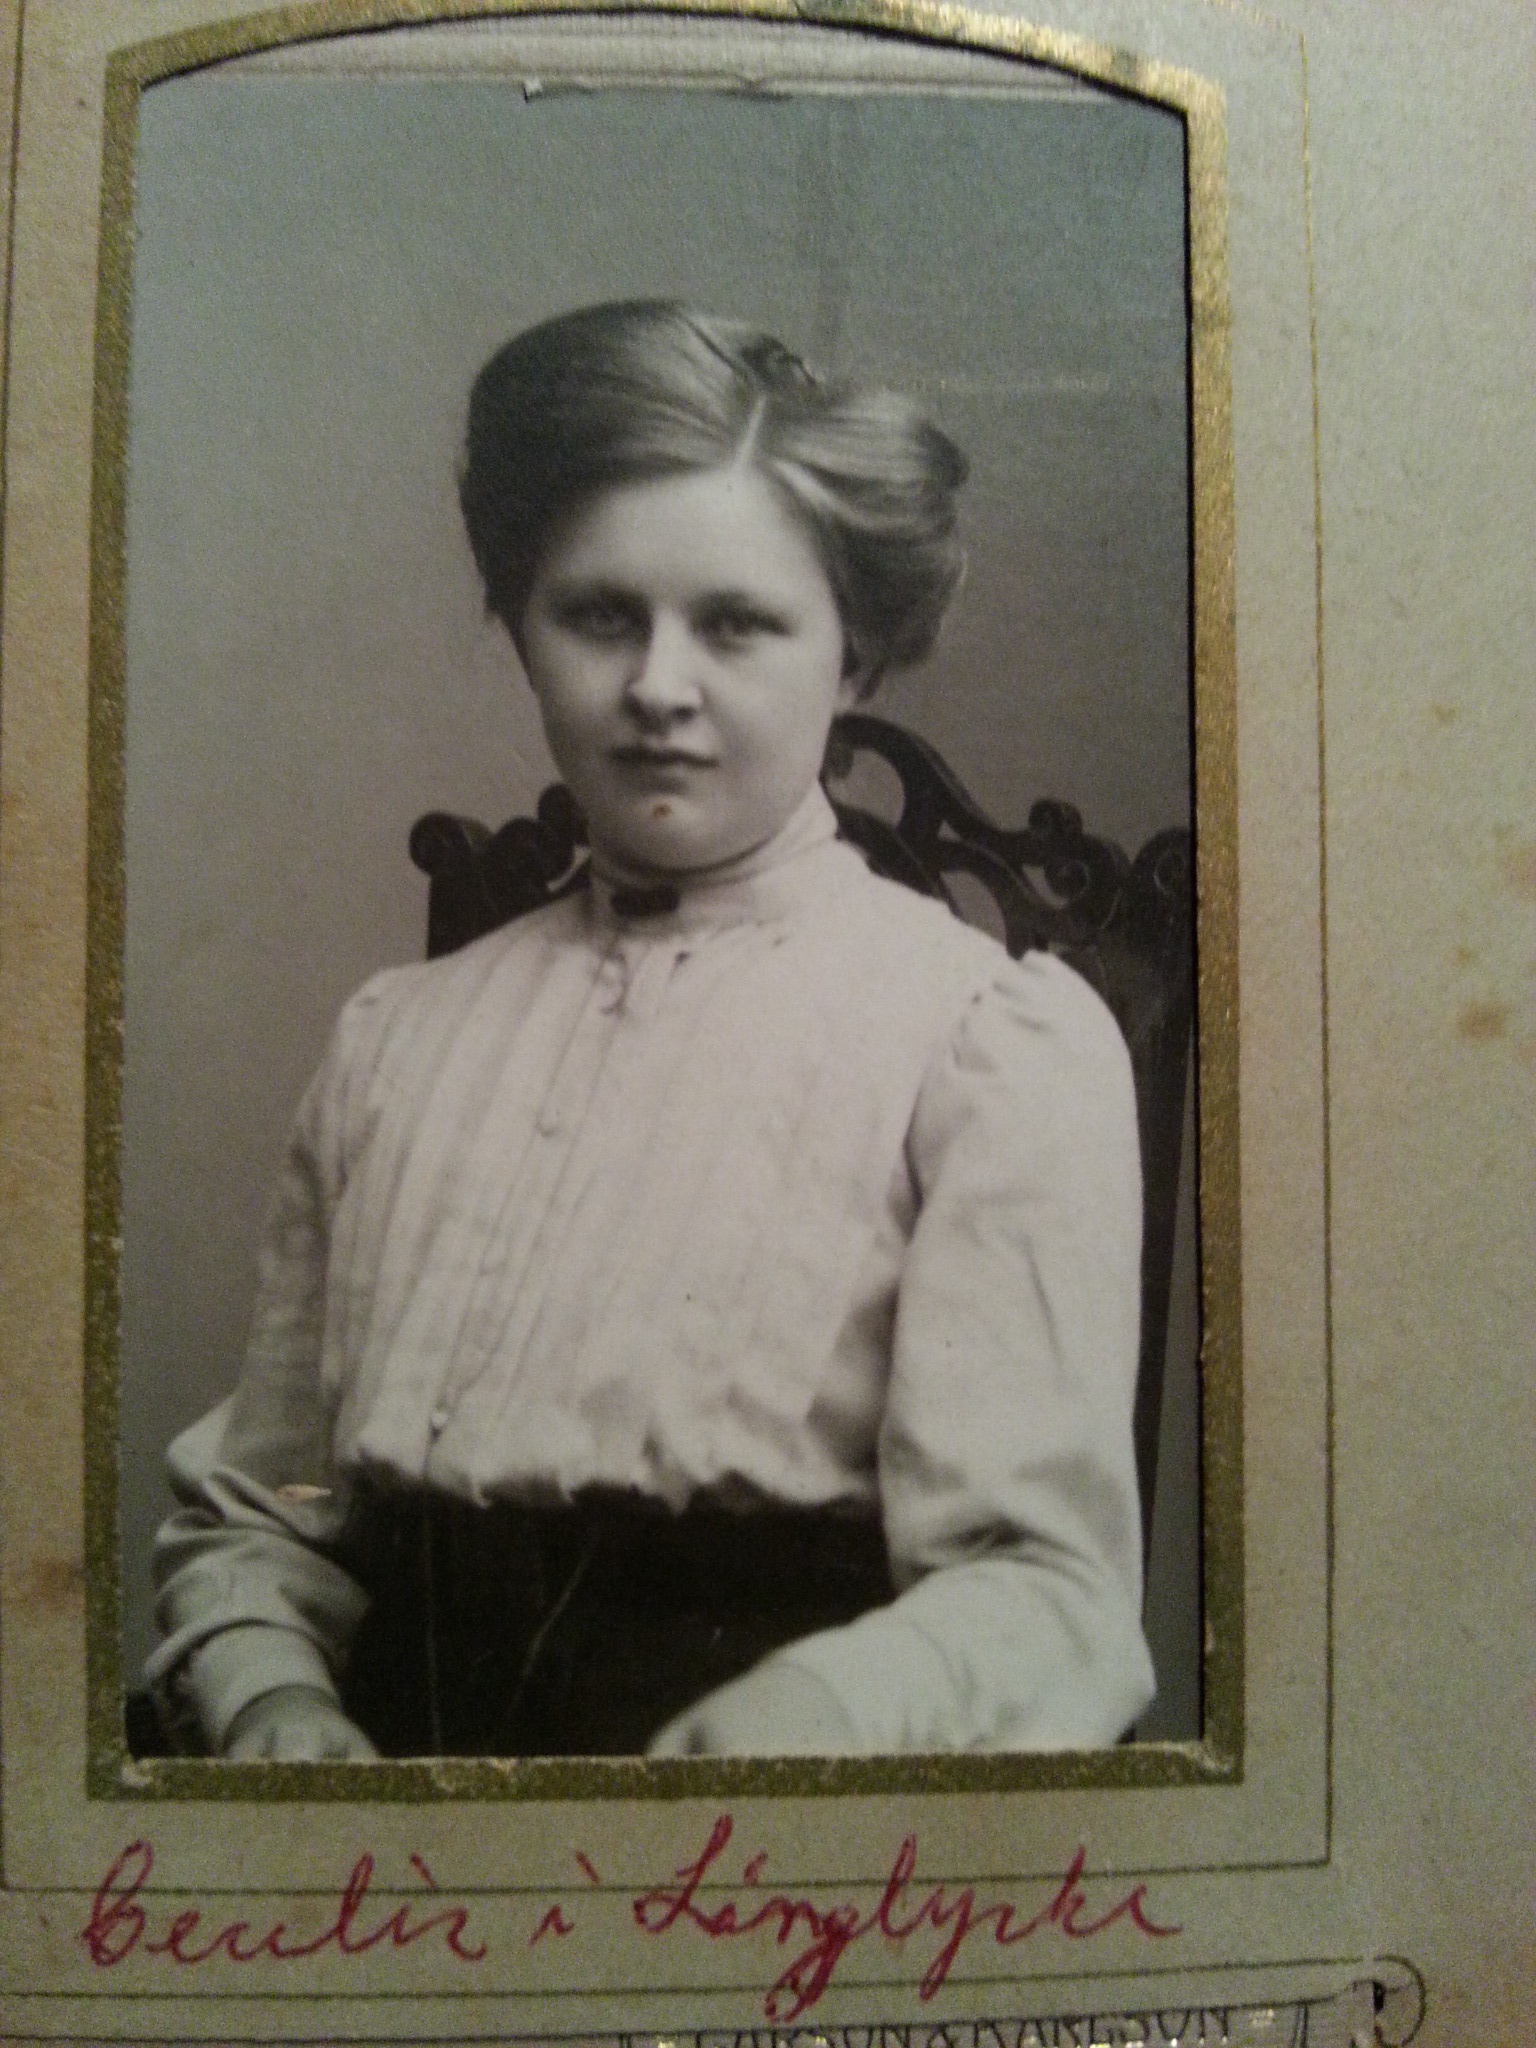 Cecilia Ã…kesson, Ã¥r 1900 bodde hon med familjen pÃ¥ LÃ¥ngelycke gÃ¥rd.







